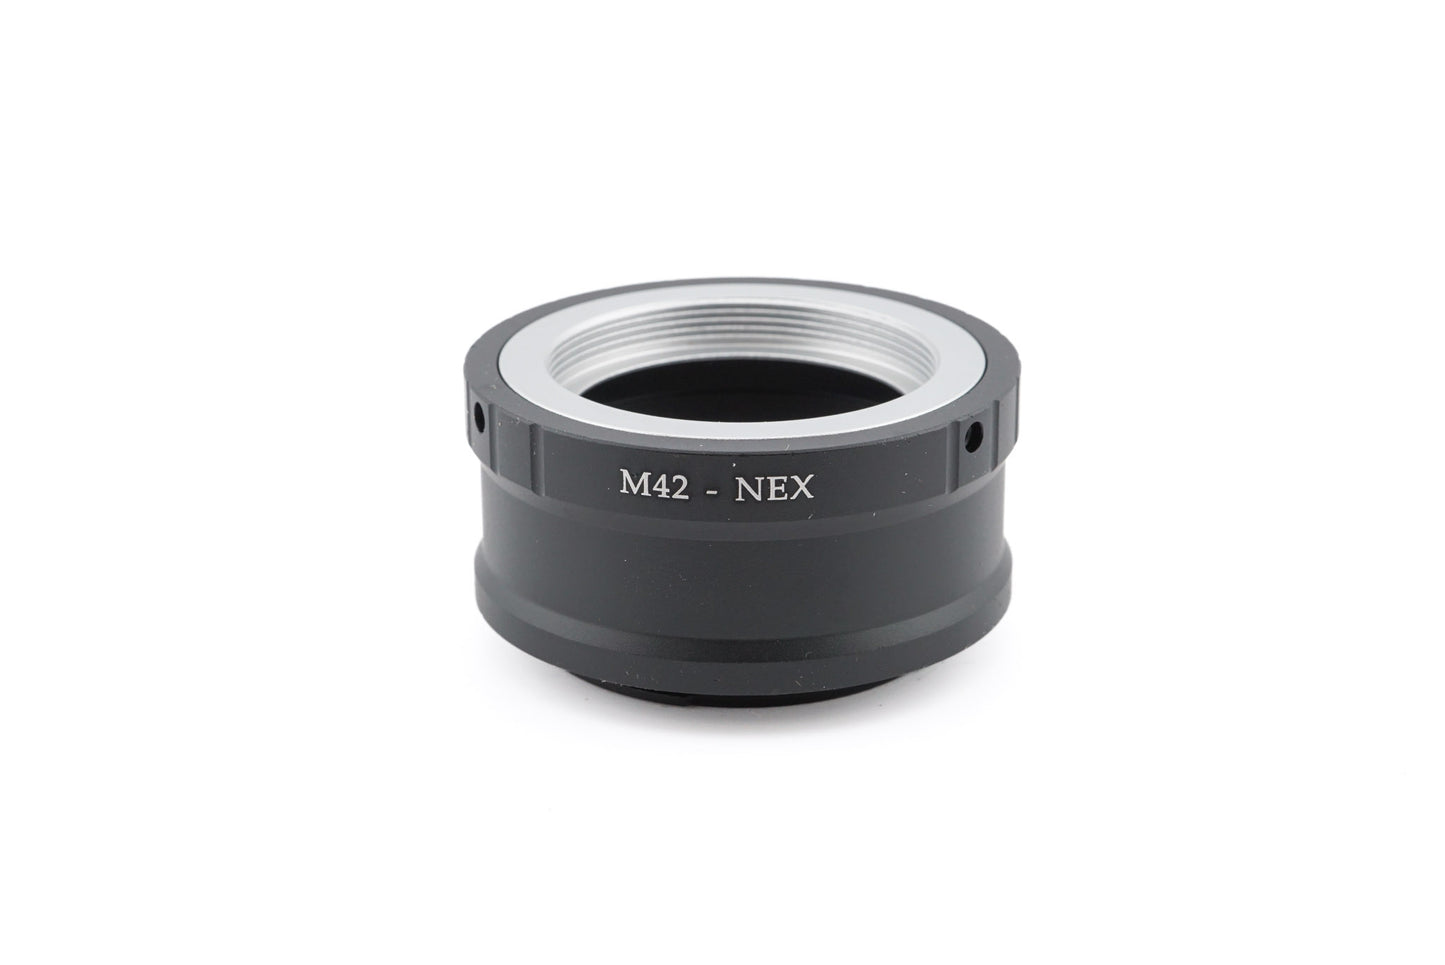 Generic M42 - Sony E (M42 - NEX) Adapter - Lens Adapter